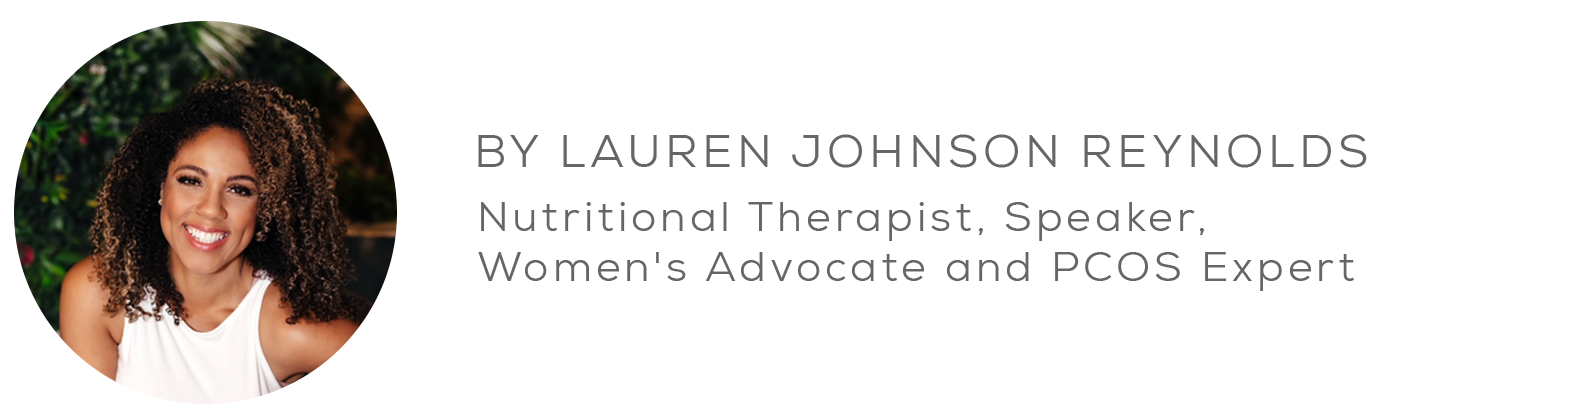 BY LAUREN JOHNSON REYNOLDS. Nutritional Therapist, Speaker, Women's Advocate and PCOS Expert.